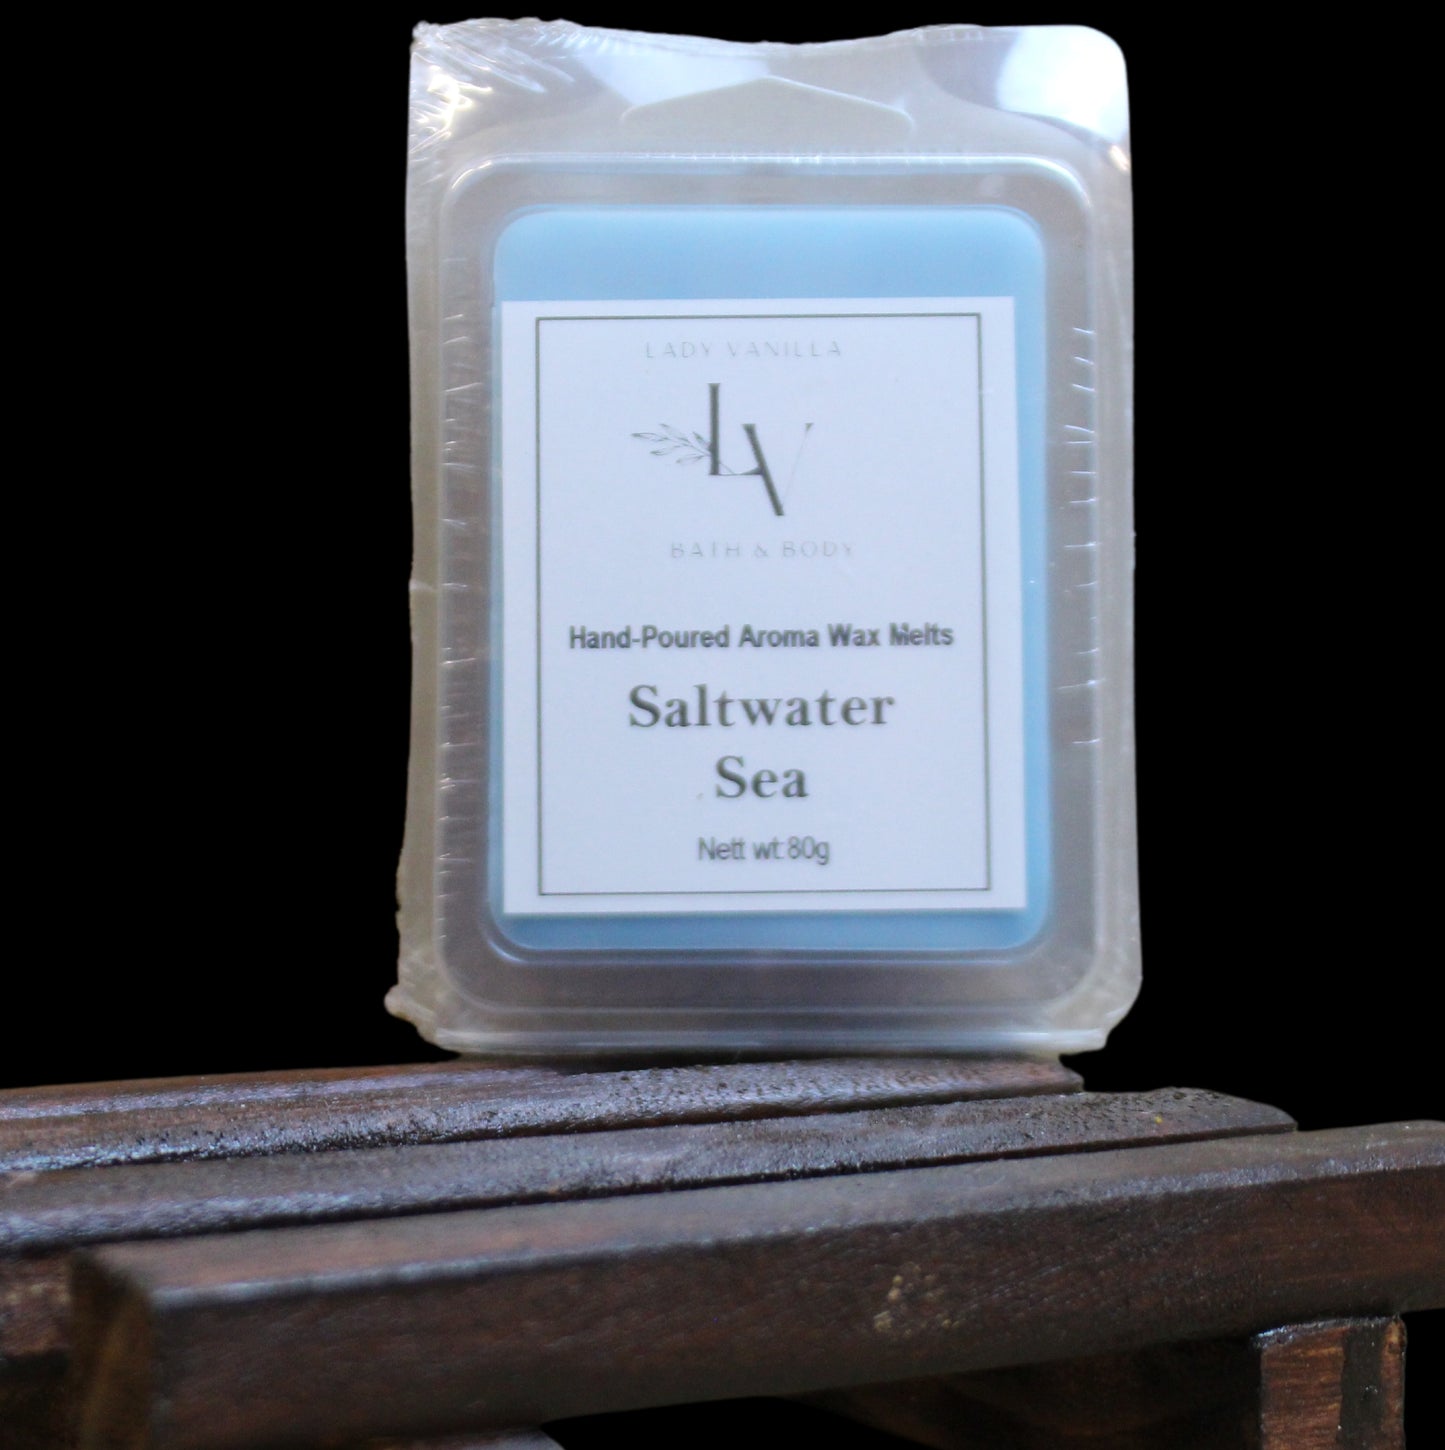 Saltwater Sea Clamshell Wax Melt